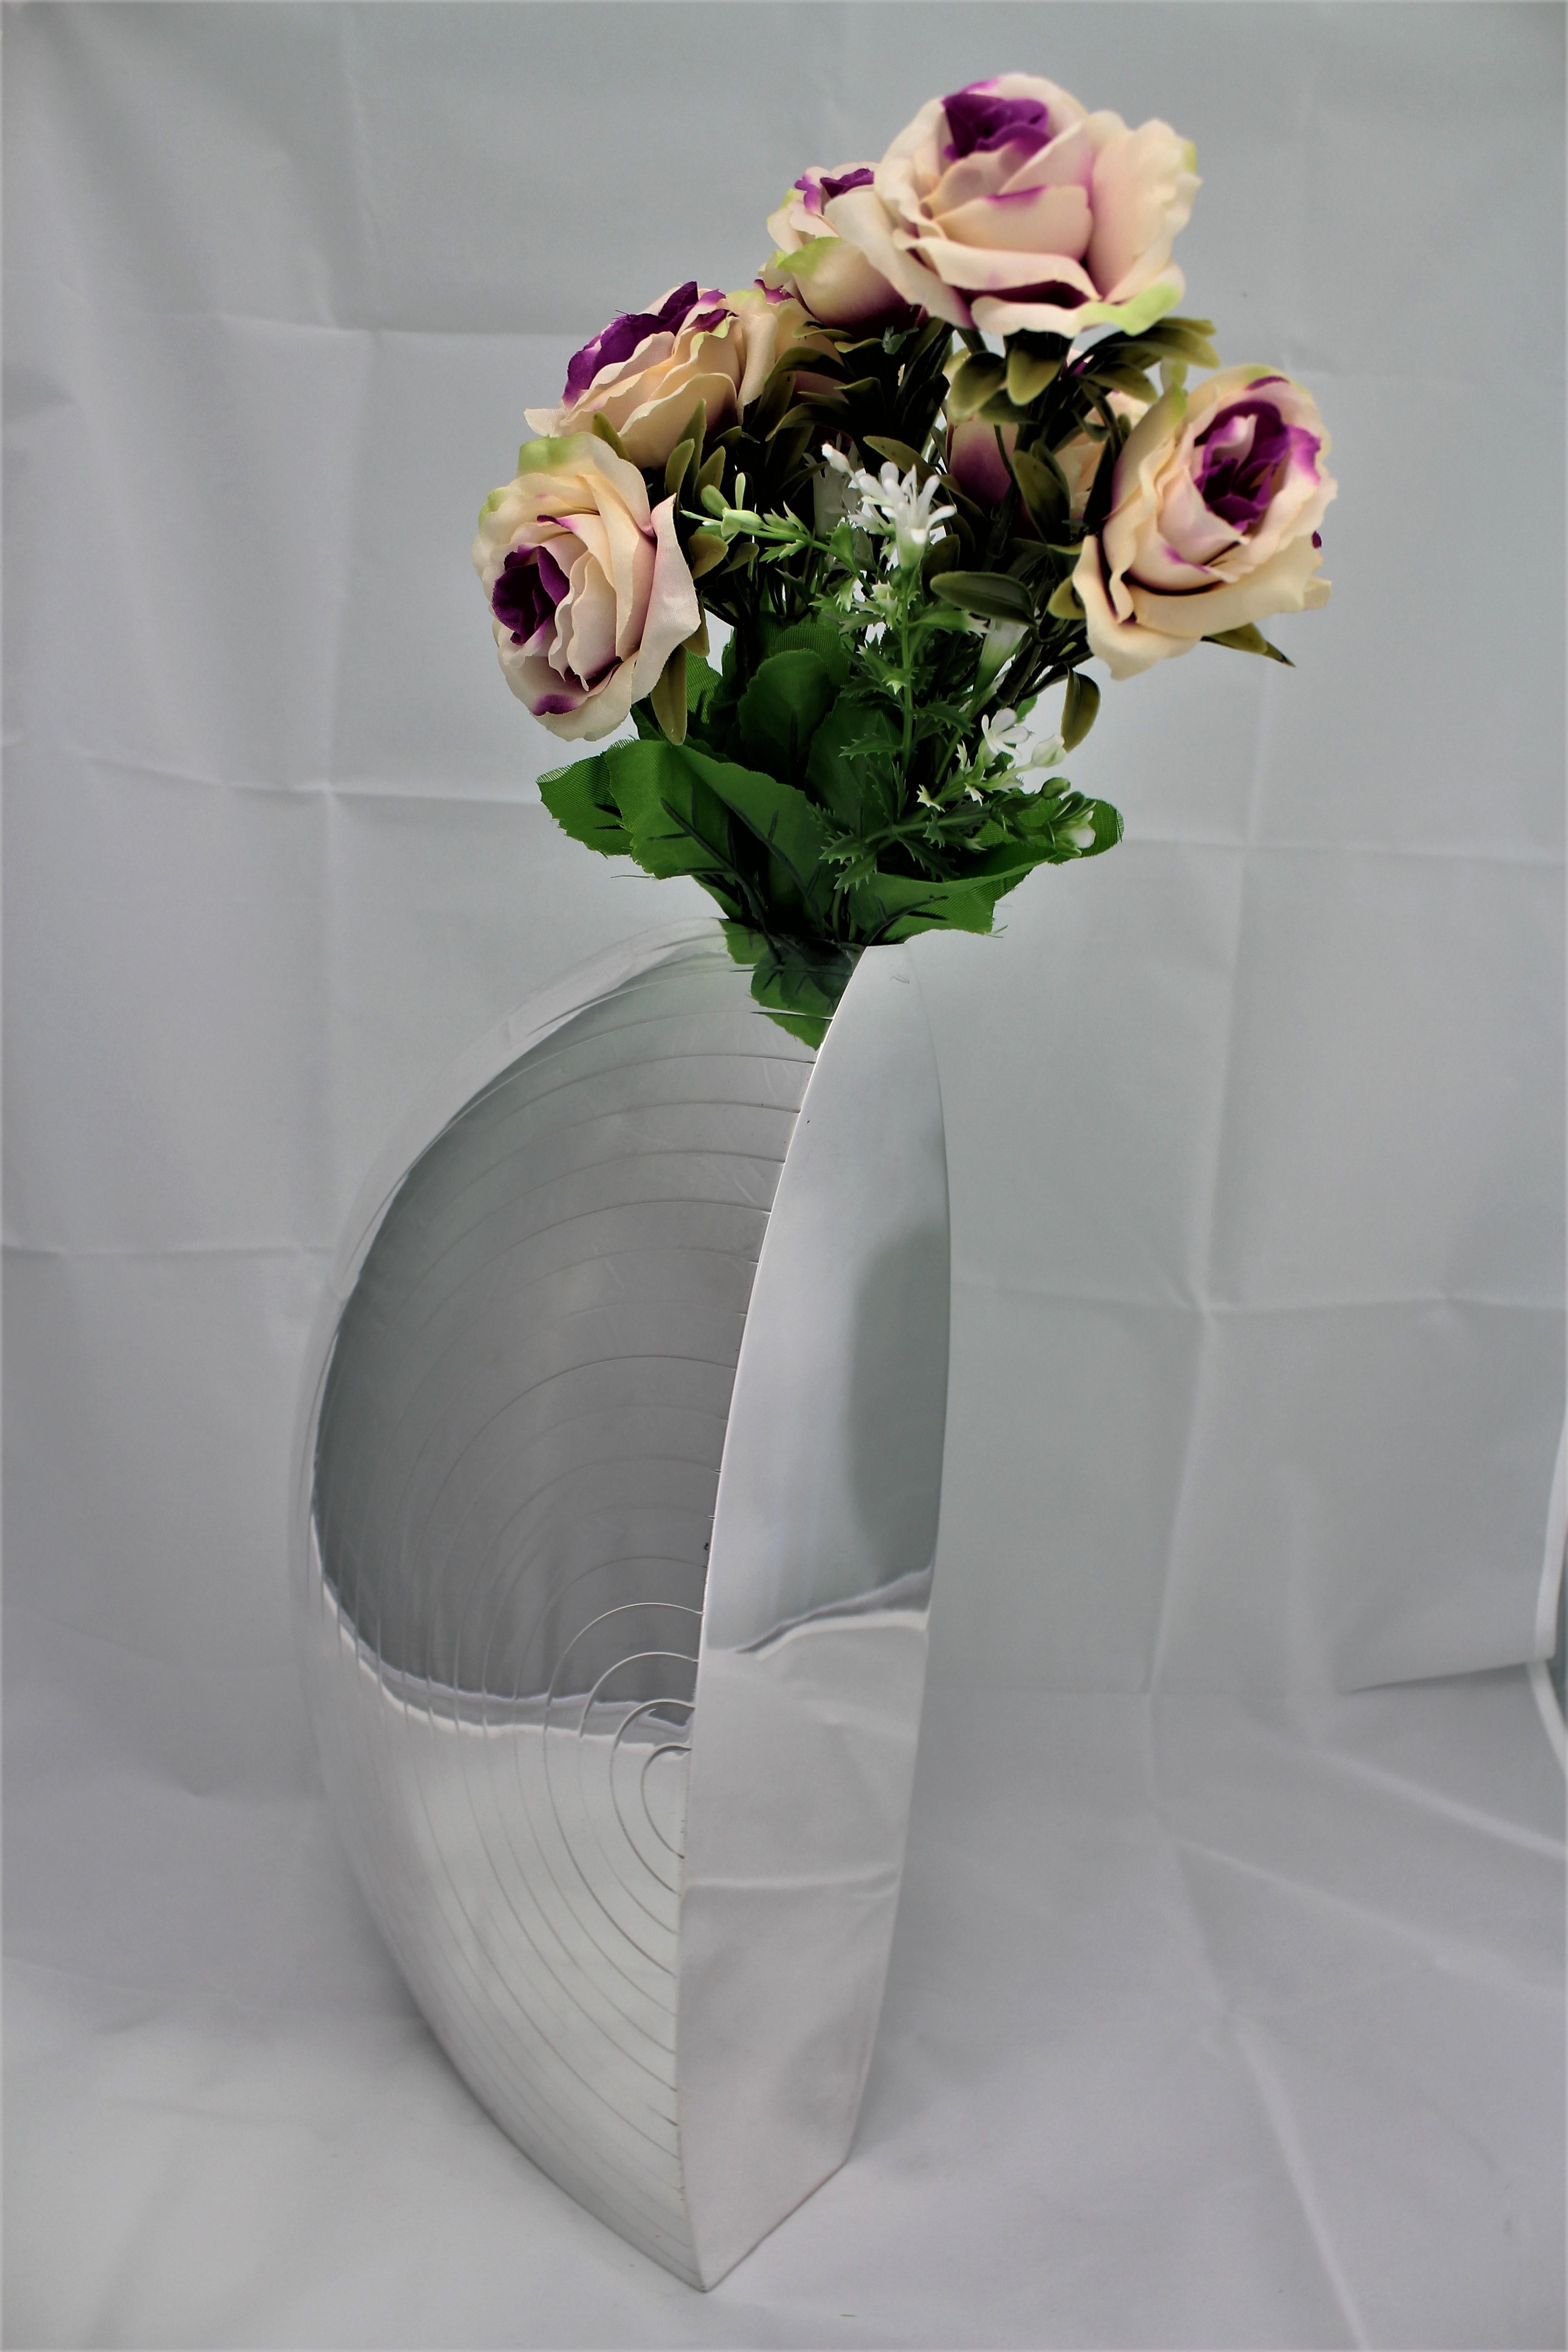 20th Century Futurist Silver Sail Flower Vase by Luigi Diani Milan Italy, 1920s For Sale 3